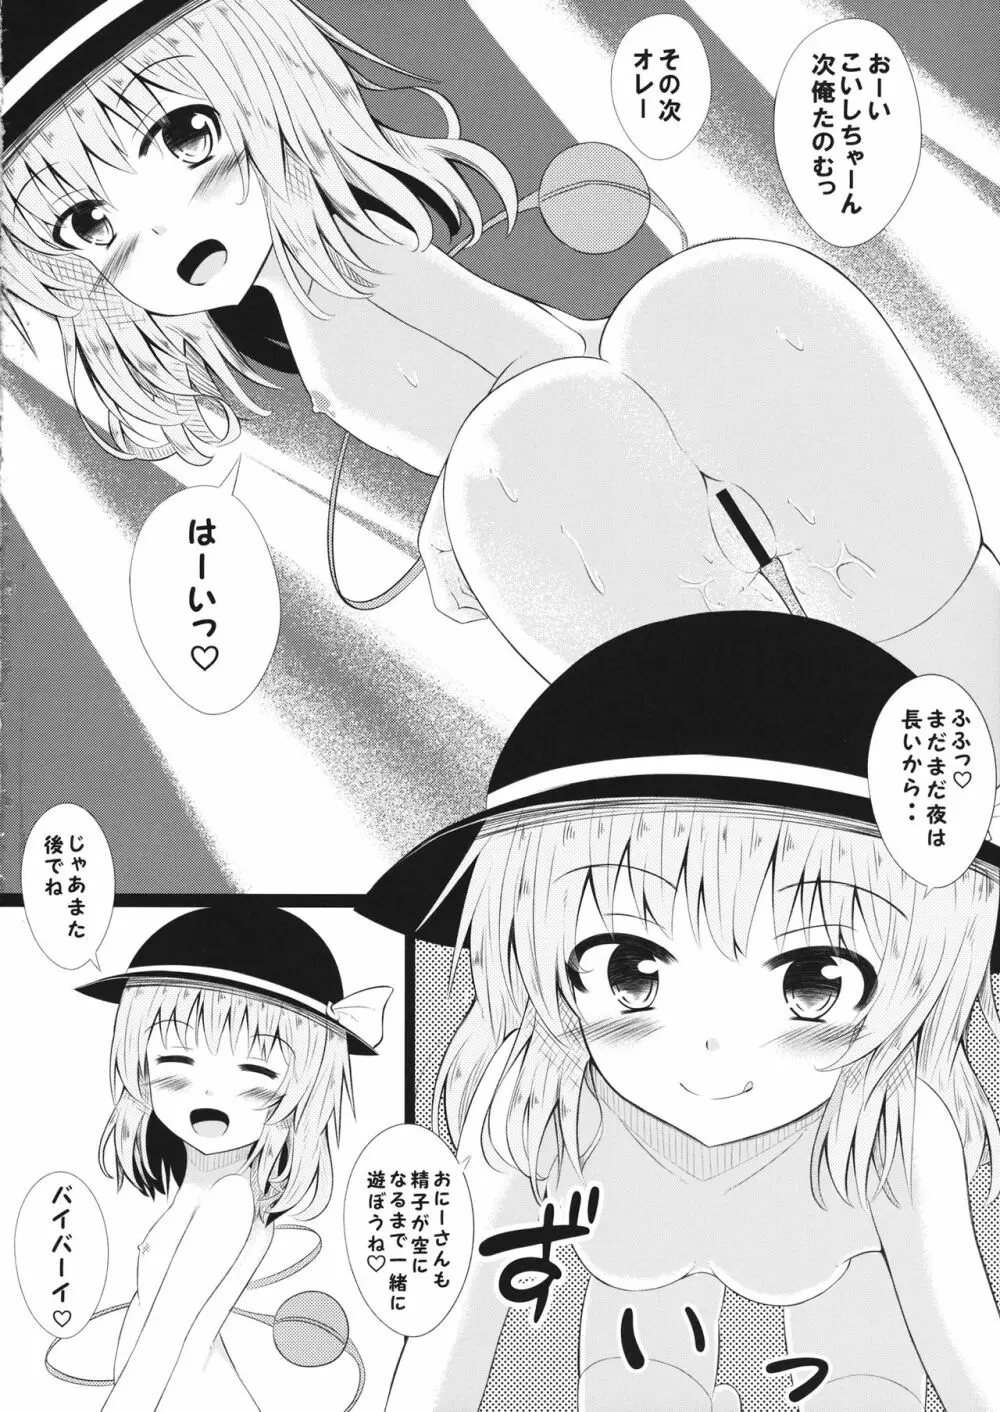 komeiji night club - page23